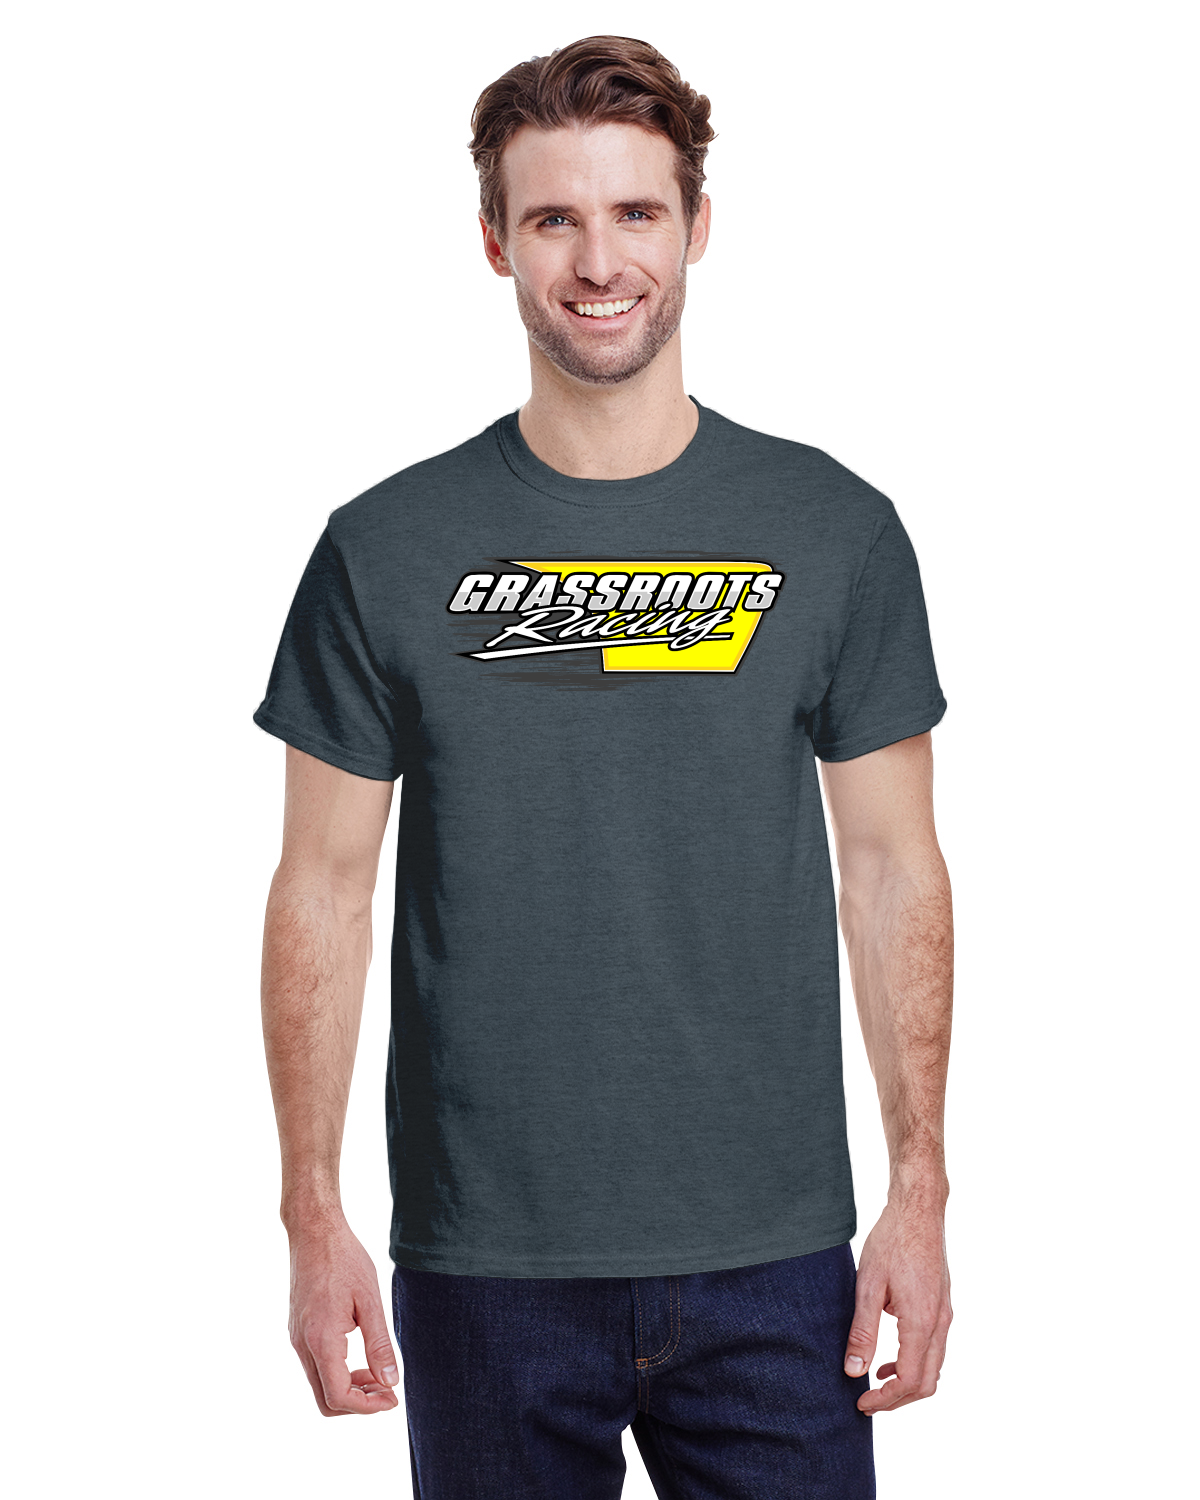 Cole McFadden Grassroots Racing Name/Number Adult shirt